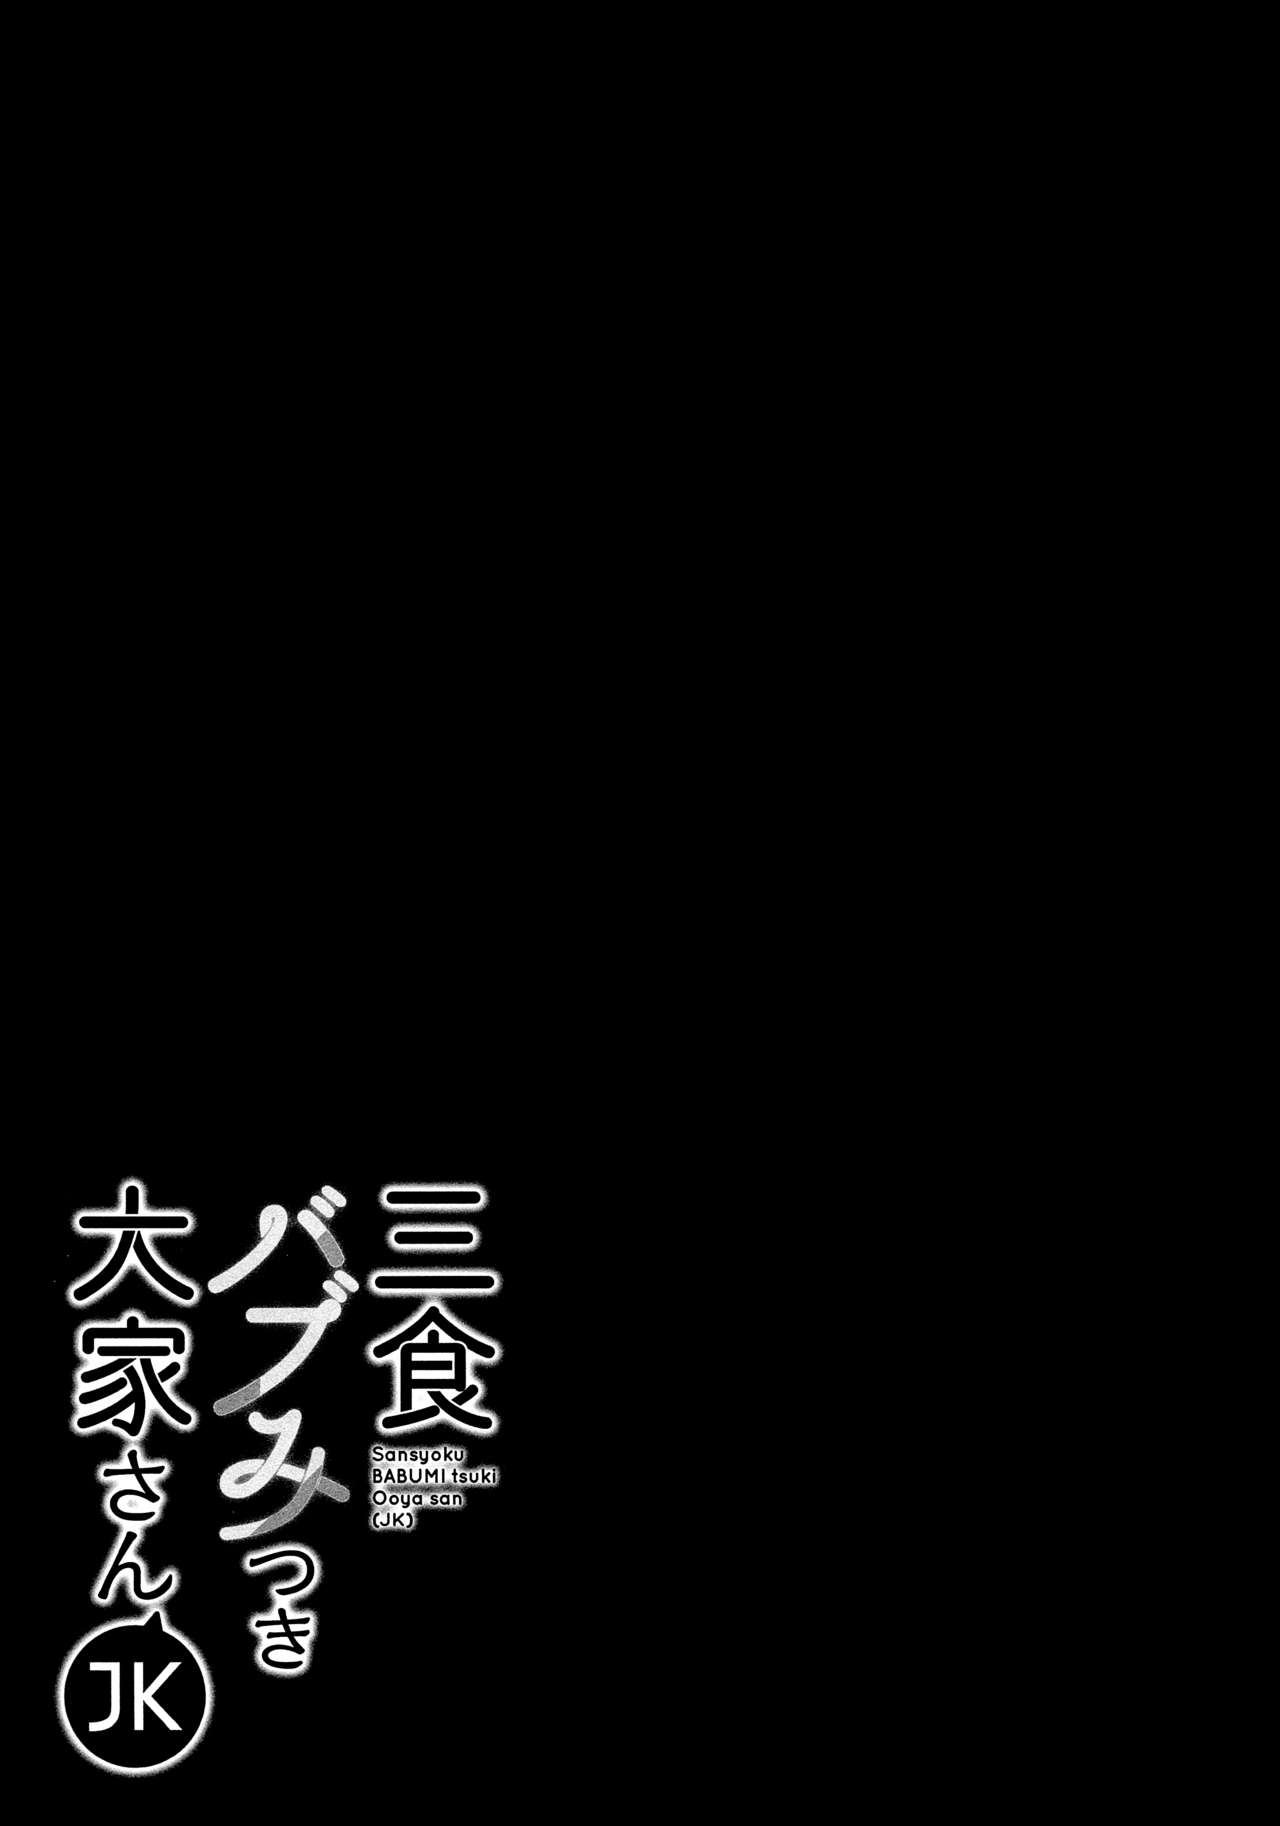 (C94) [moco chouchou (ひさまくまこ)] 三食バブみつき大家さん (JK) [中国翻訳]